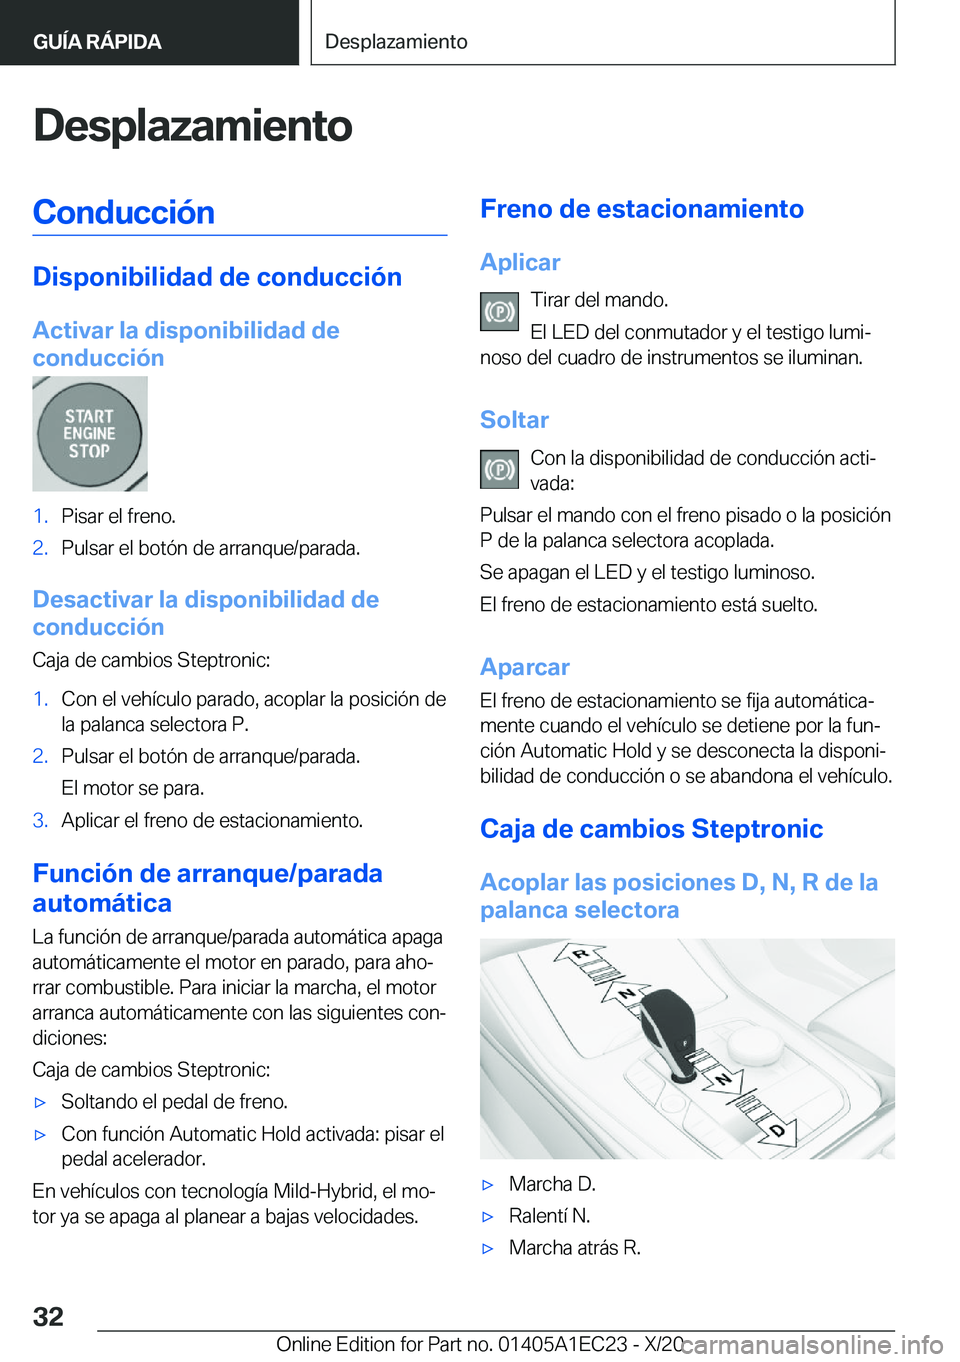 BMW 8 SERIES GRAN COUPE 2021  Manuales de Empleo (in Spanish) �D�e�s�p�l�a�z�a�m�i�e�n�t�o�C�o�n�d�u�c�c�i�